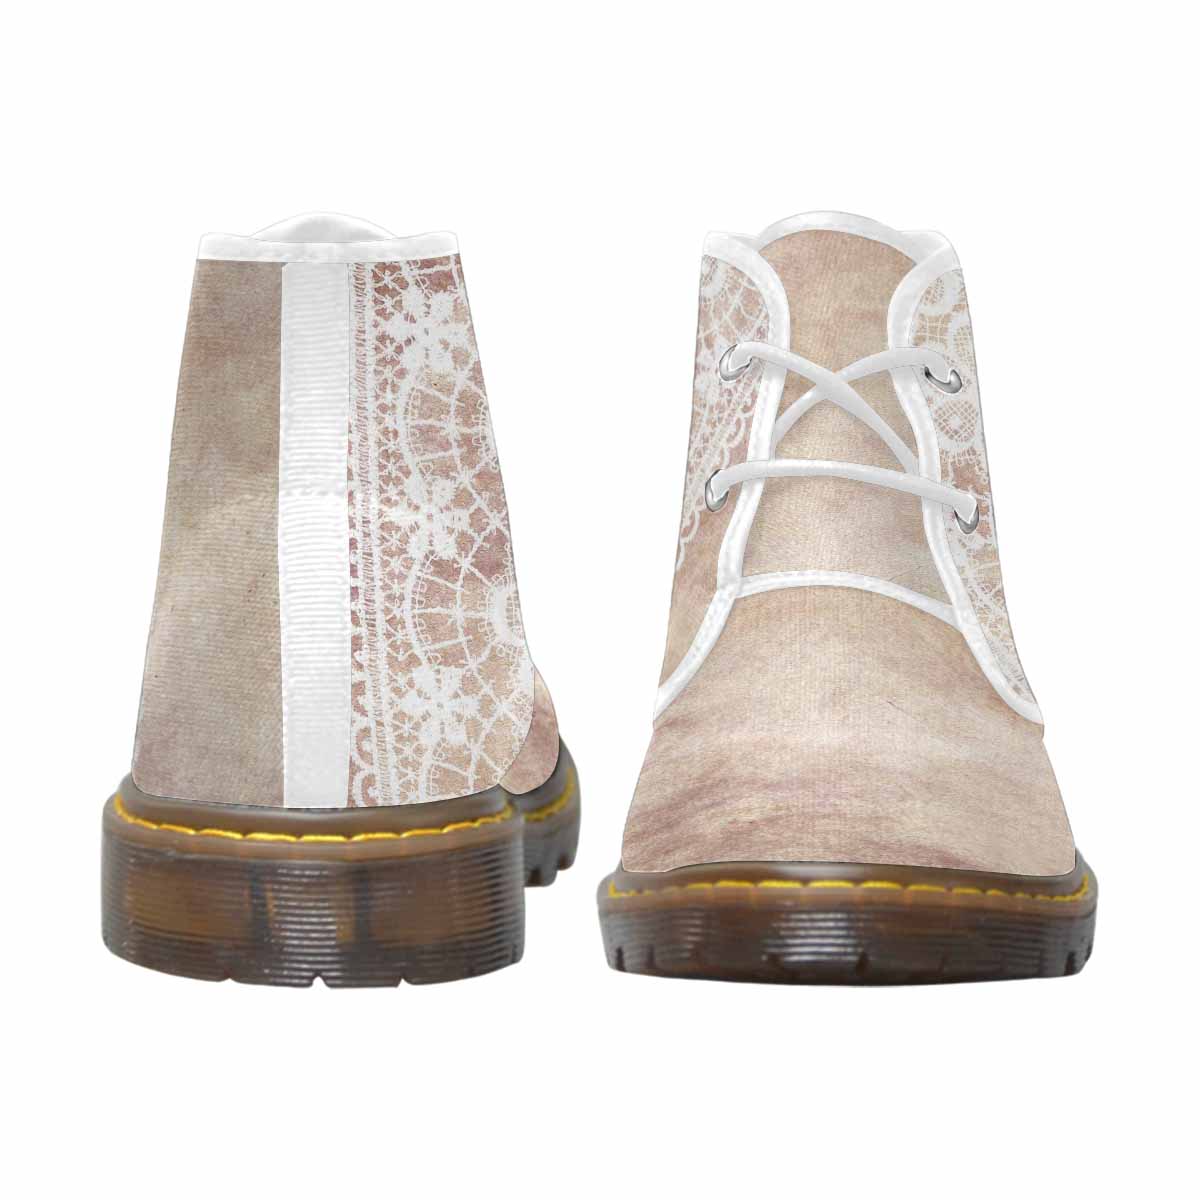 Lace Print, Cute comfy womens Chukka boots, design 35